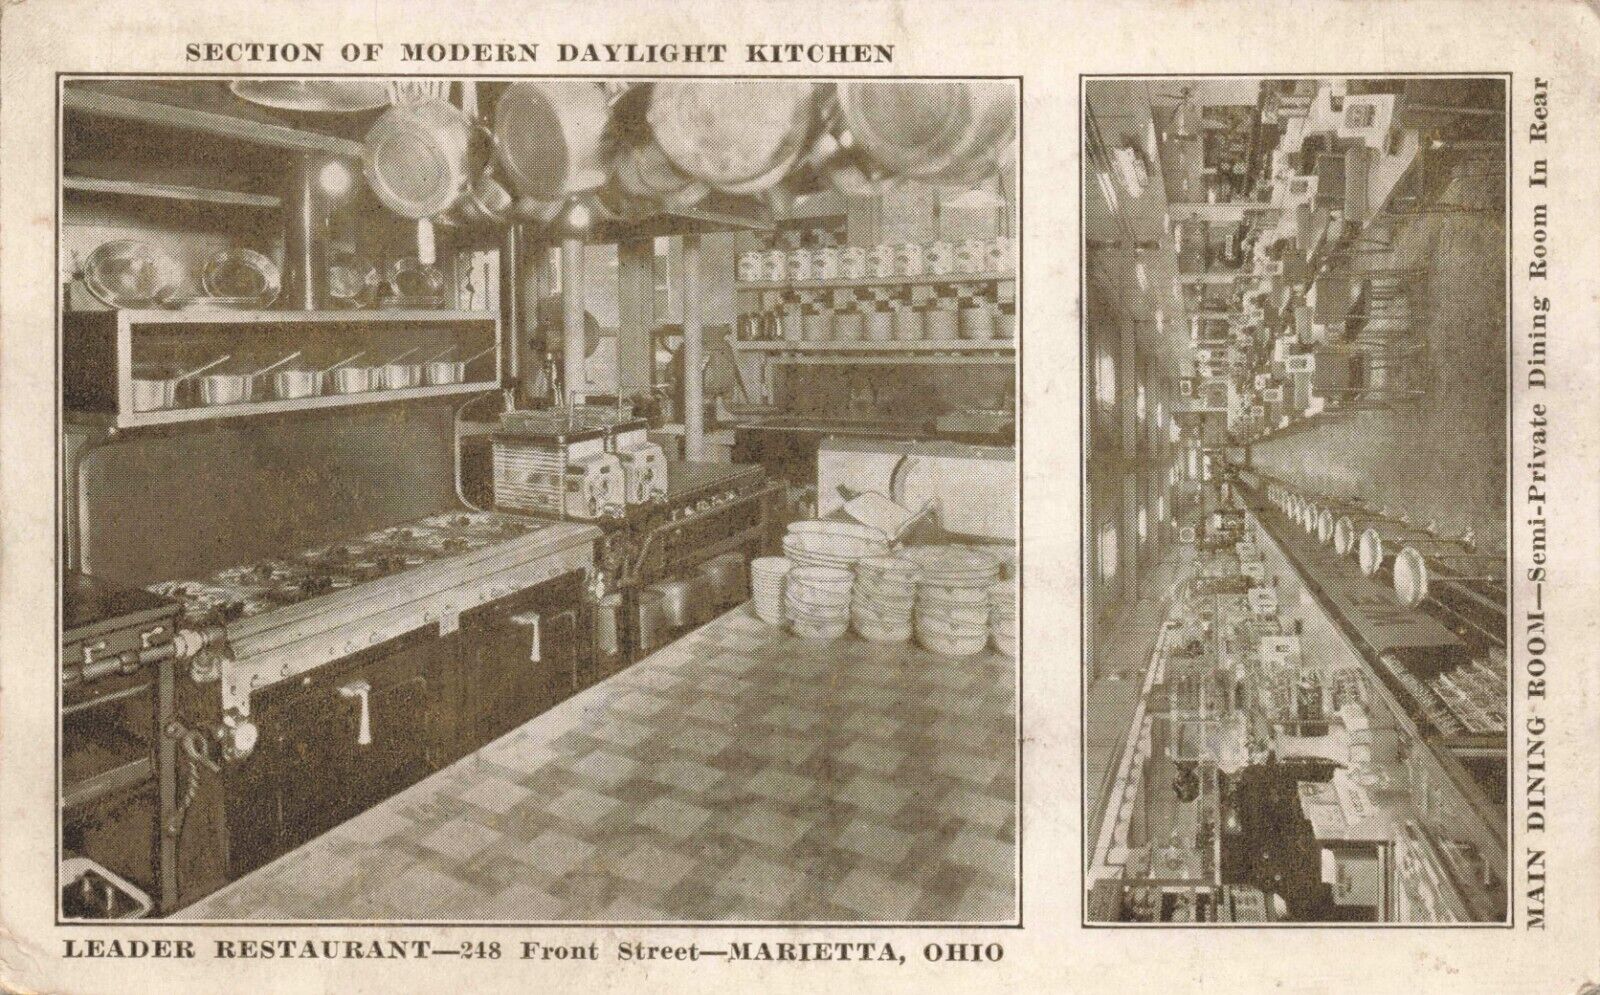 OH-Marietta, Ohio-Interior view of Leader Restaurant 1941 A23